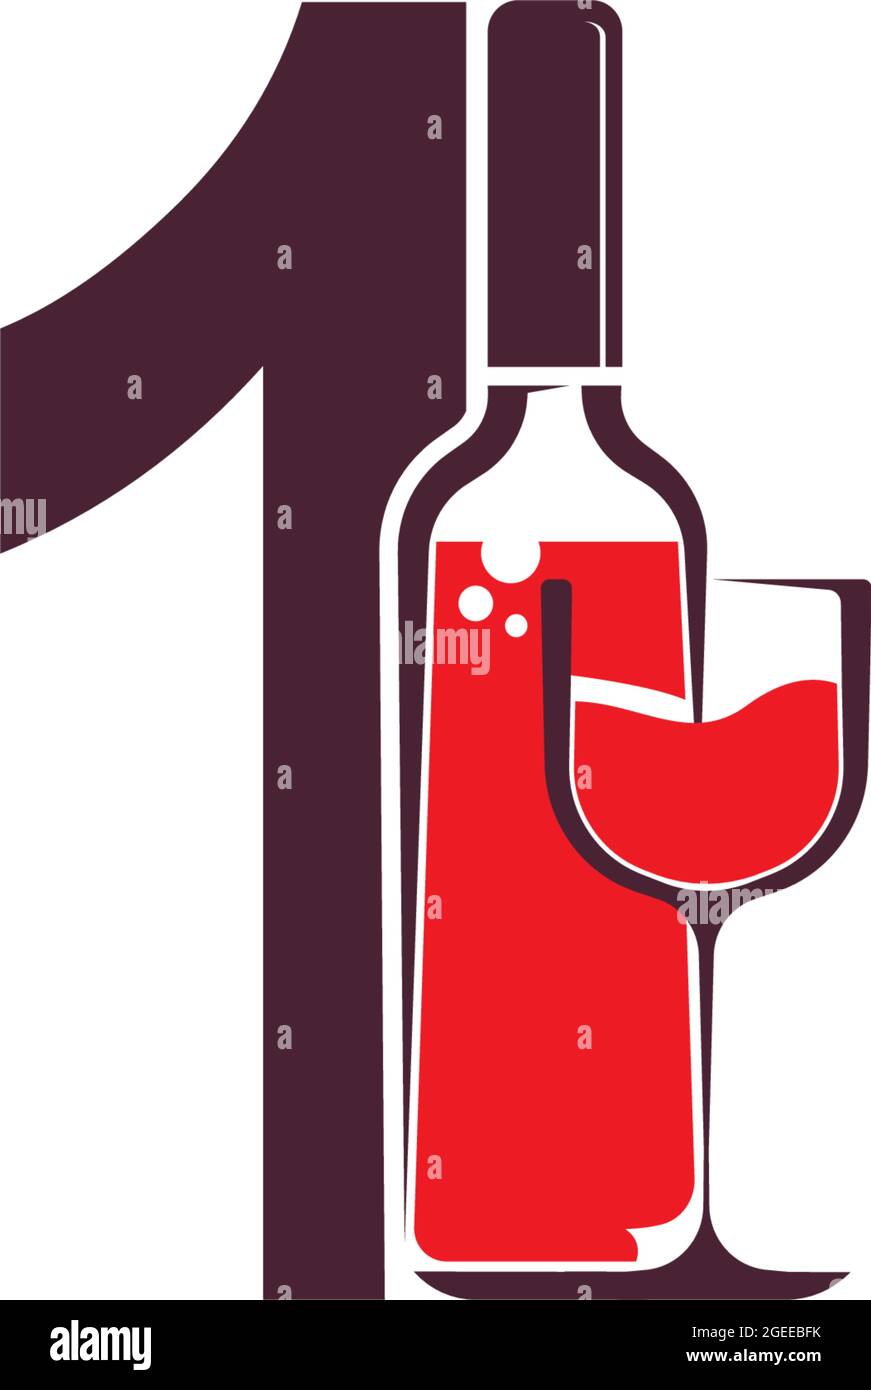 https://c8.alamy.com/comp/2GEEBFK/number-1-with-wine-bottle-icon-logo-vector-template-2GEEBFK.jpg